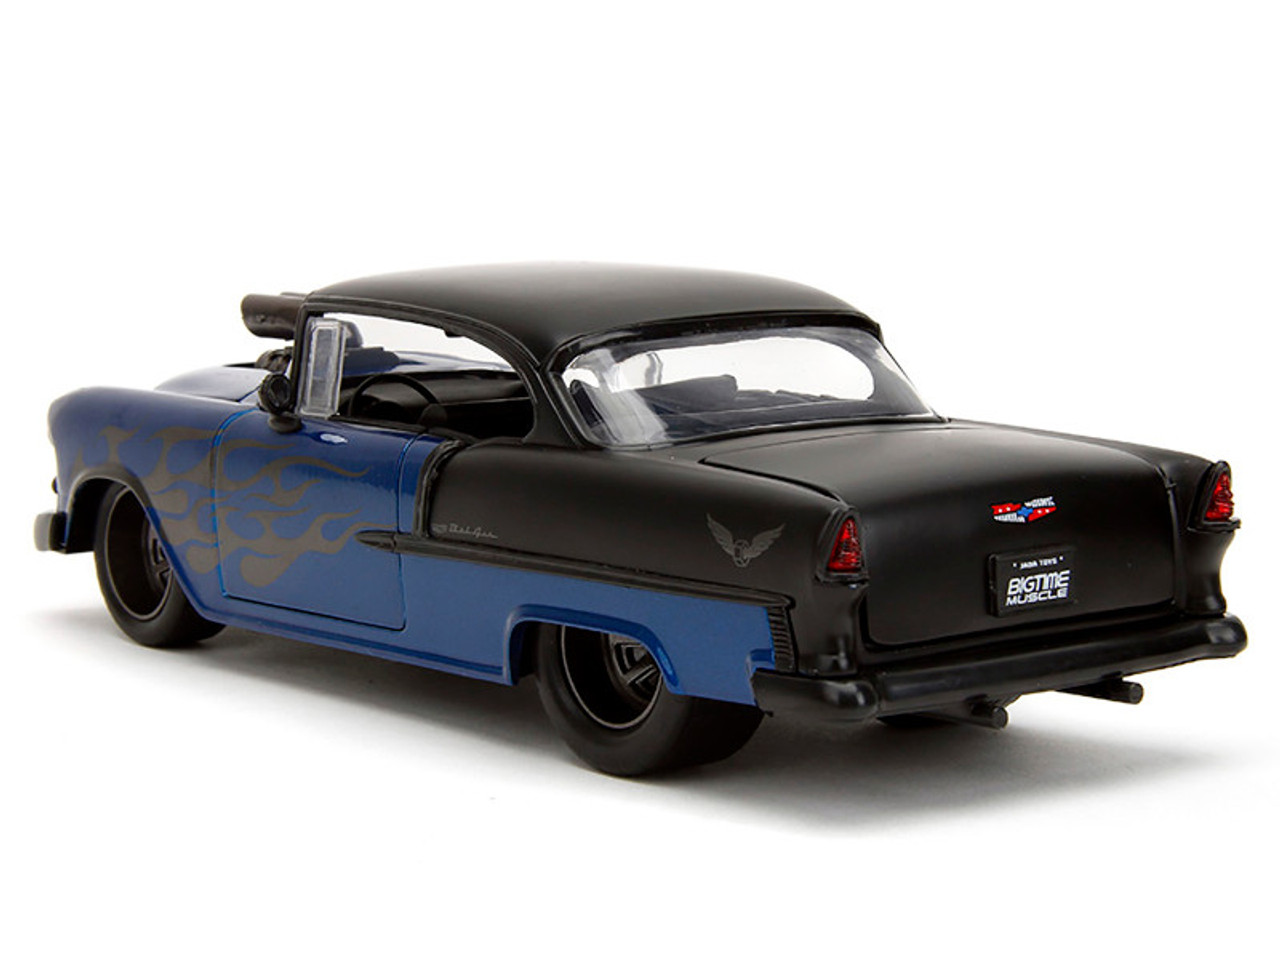 1955 Chevrolet Bel Air Blue Metallic and Black with Black Flames "Bigtime Muscle" Series 1/24 Diecast Model Car by Jada